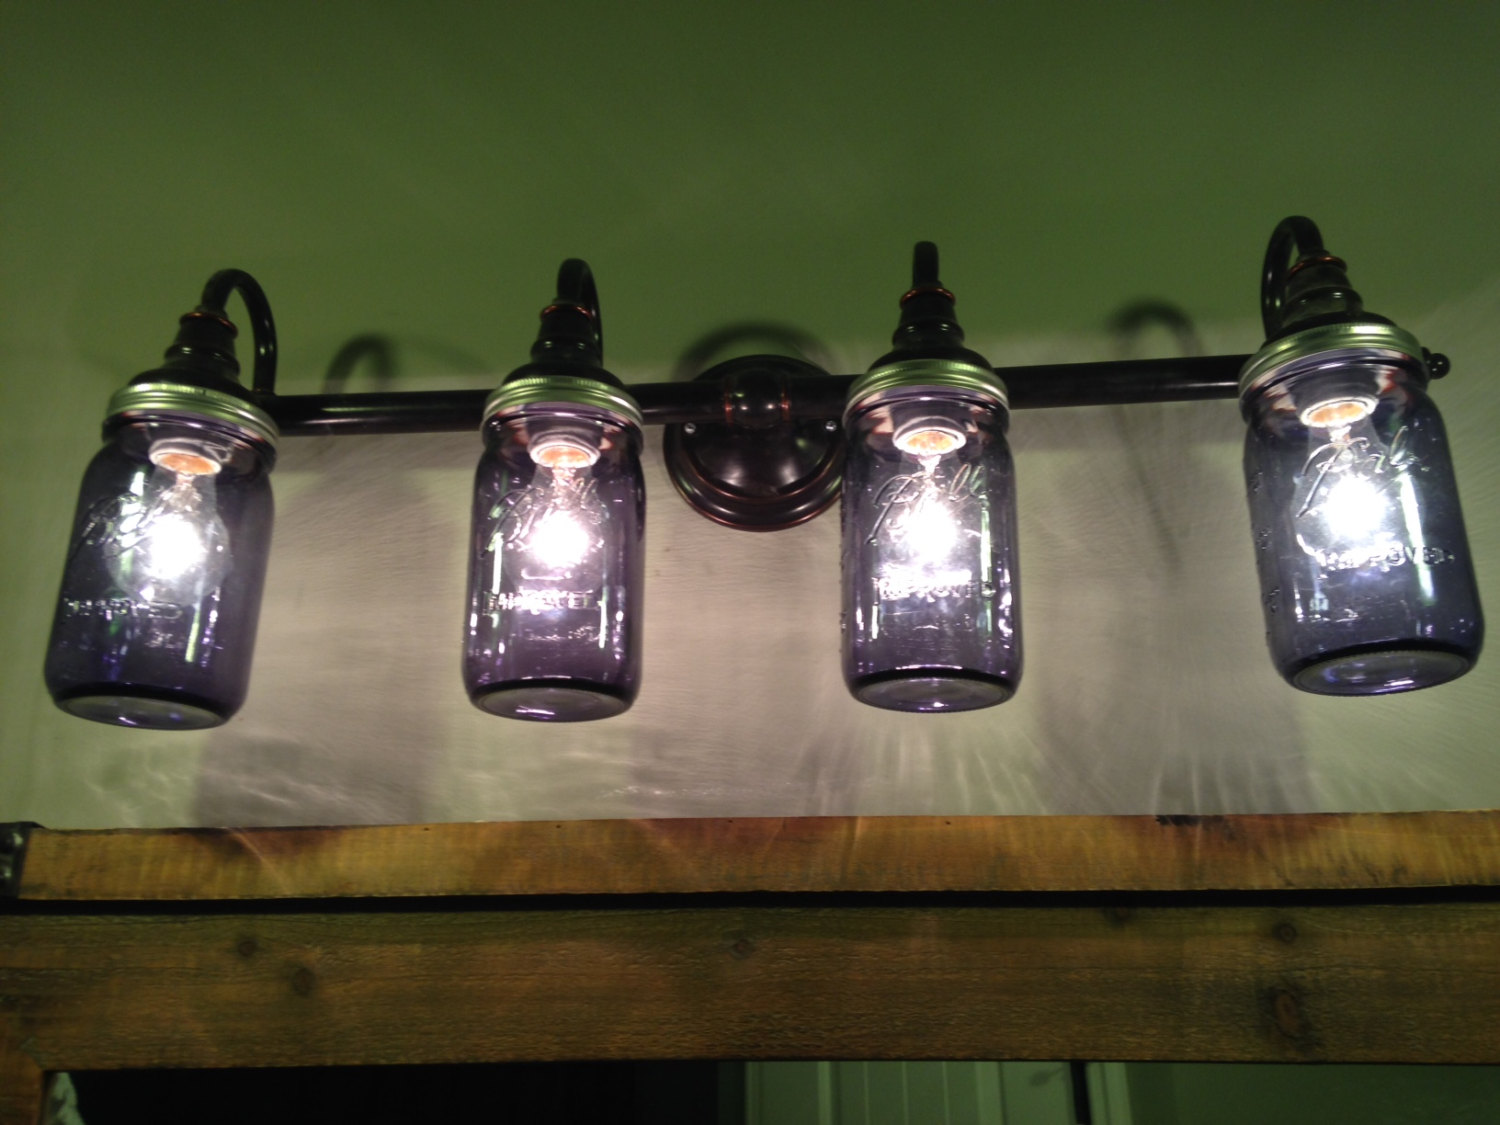 Four mason jar lights hanging on a wall.